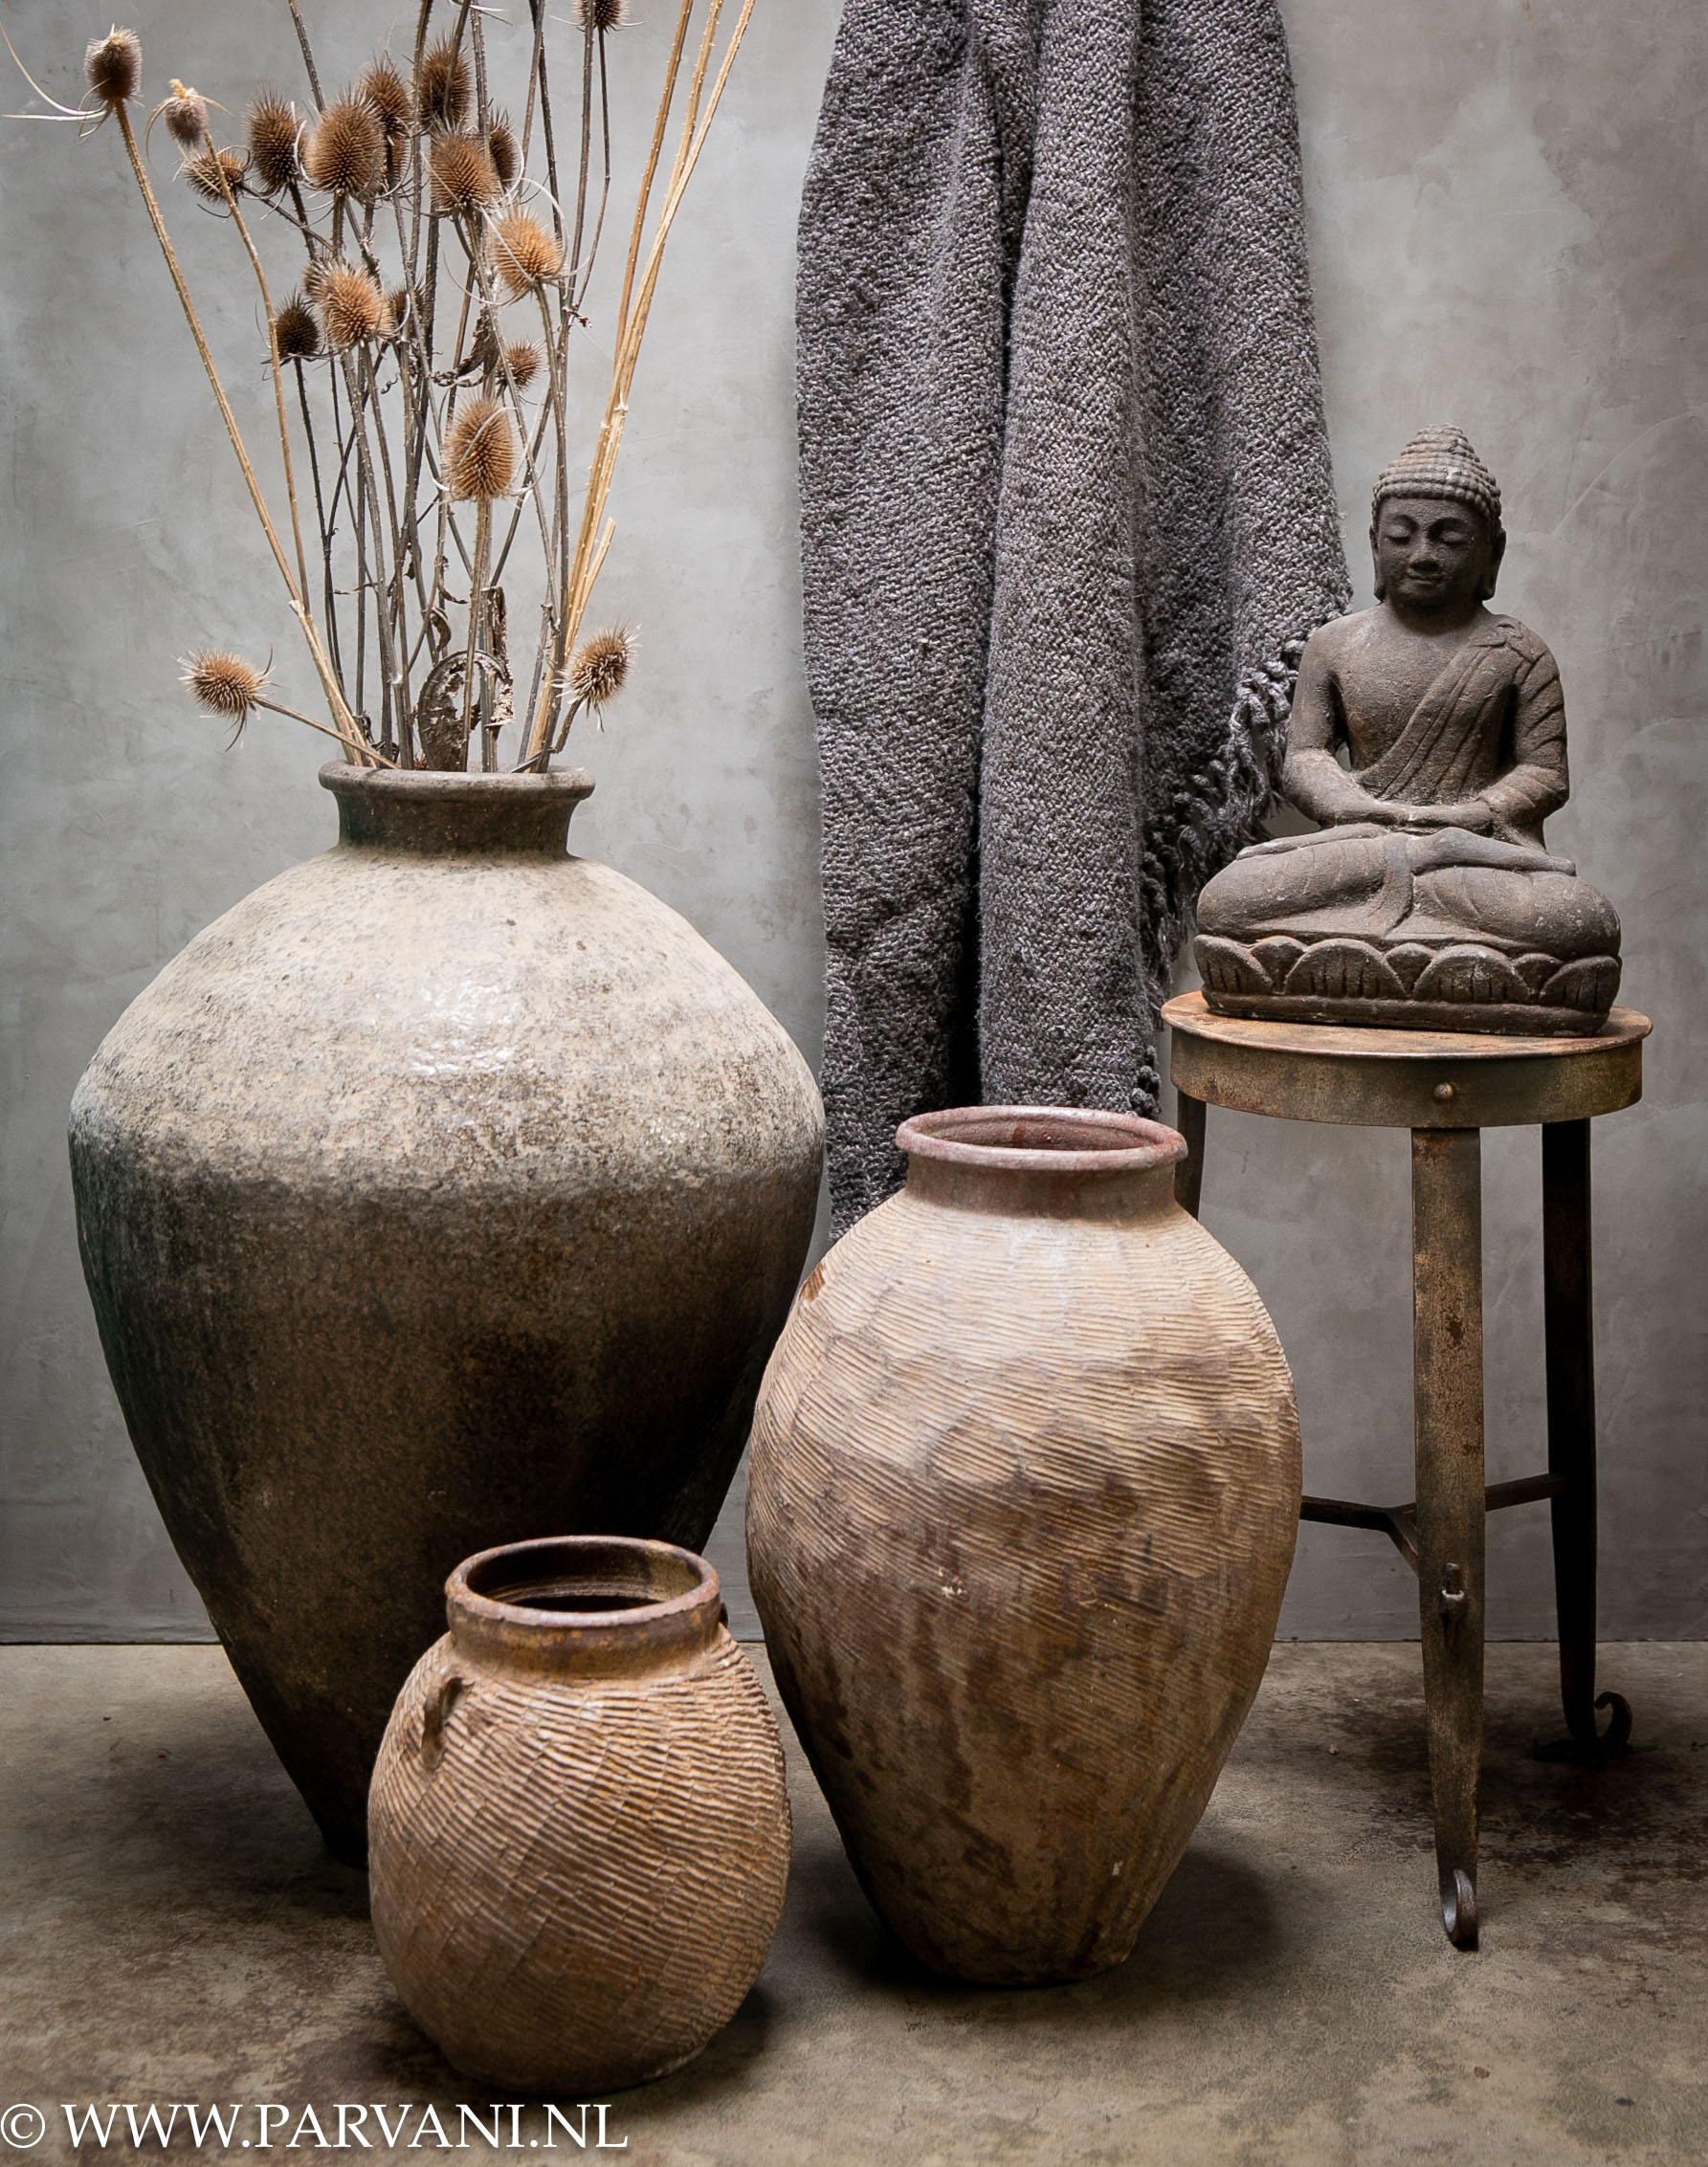 transactie Permanent Speciaal Groep aardewerk kruiken met ijzeren krukje, stenen Buddha en grof geknoopt  Hoffz plaid | Parvani